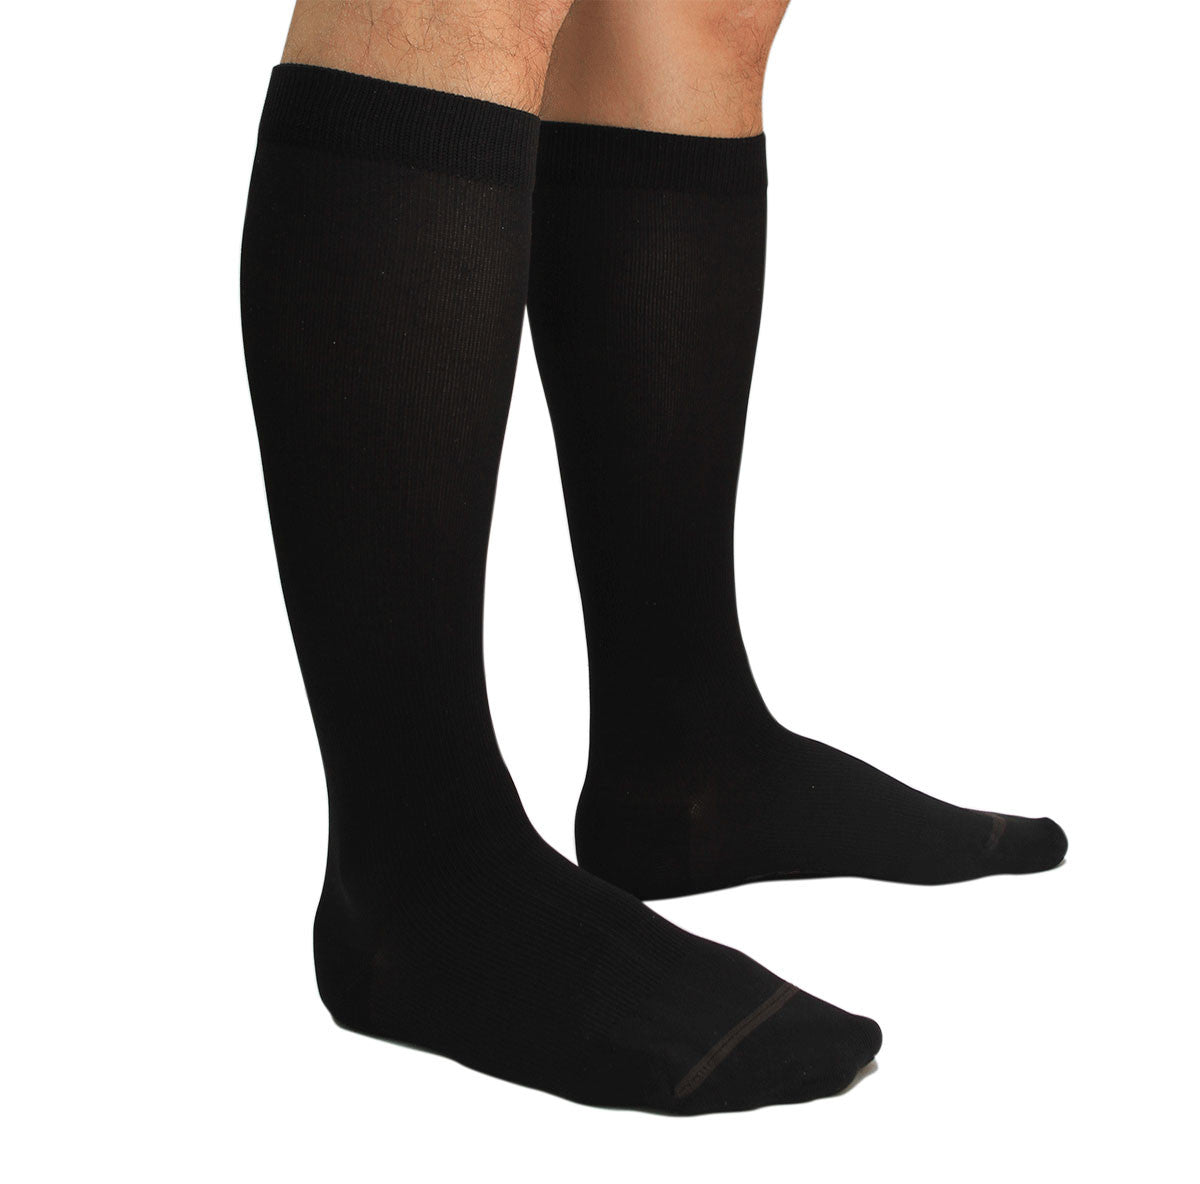 TXG compression stockings for men | Fresh, happy feet | TXG Compression ...